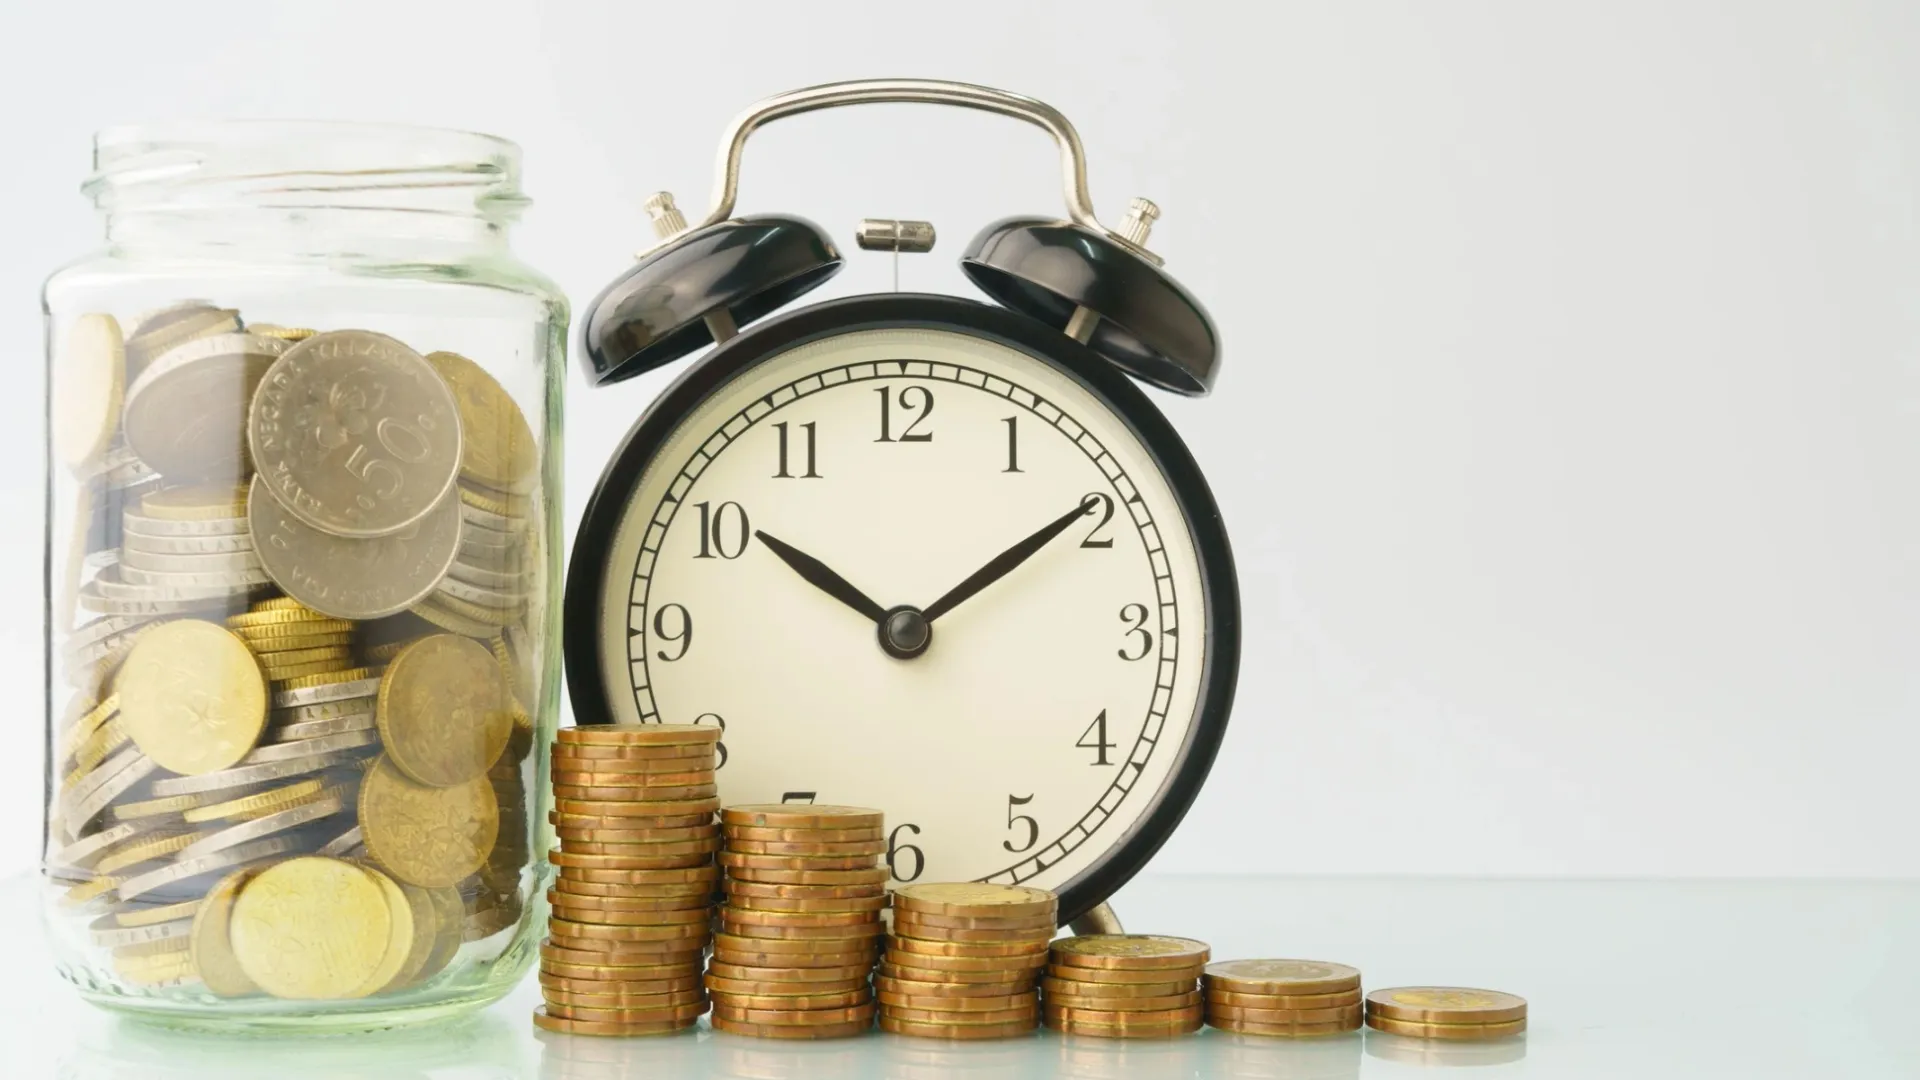 Время – деньги, берегите его. Фото: Abul Husein Photography / Shutterstock  / Fotodom